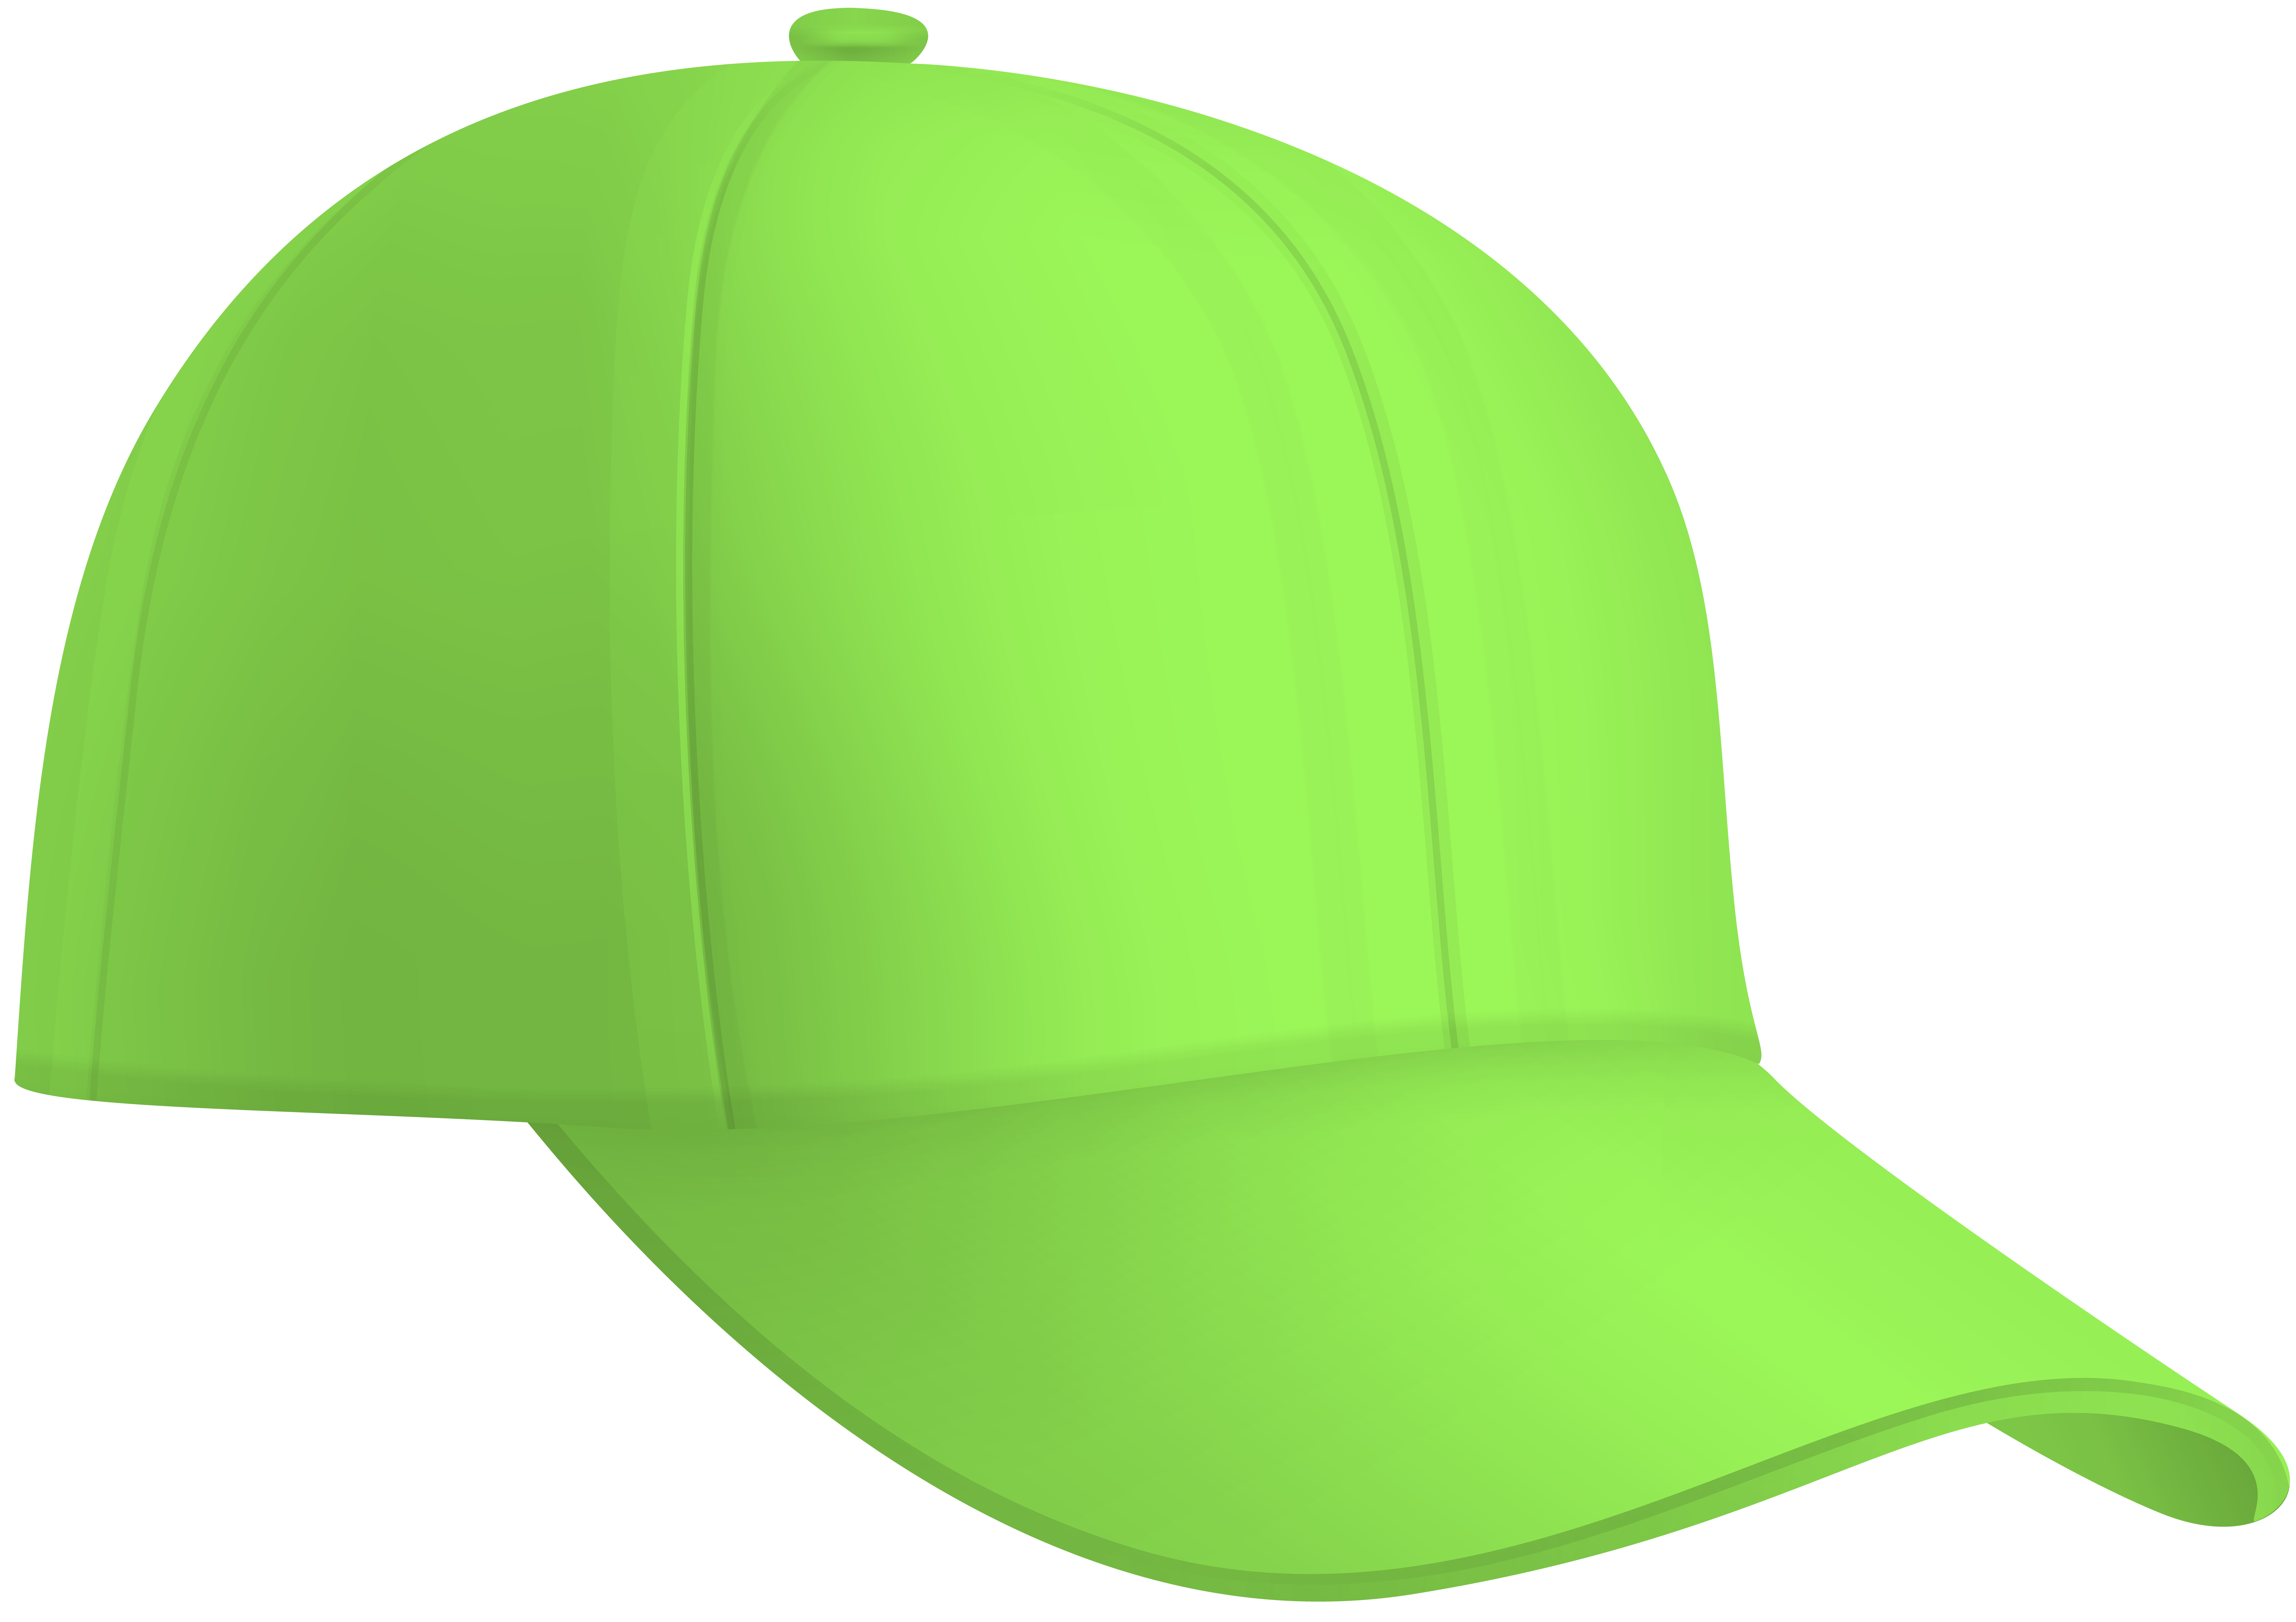 baseball cap png